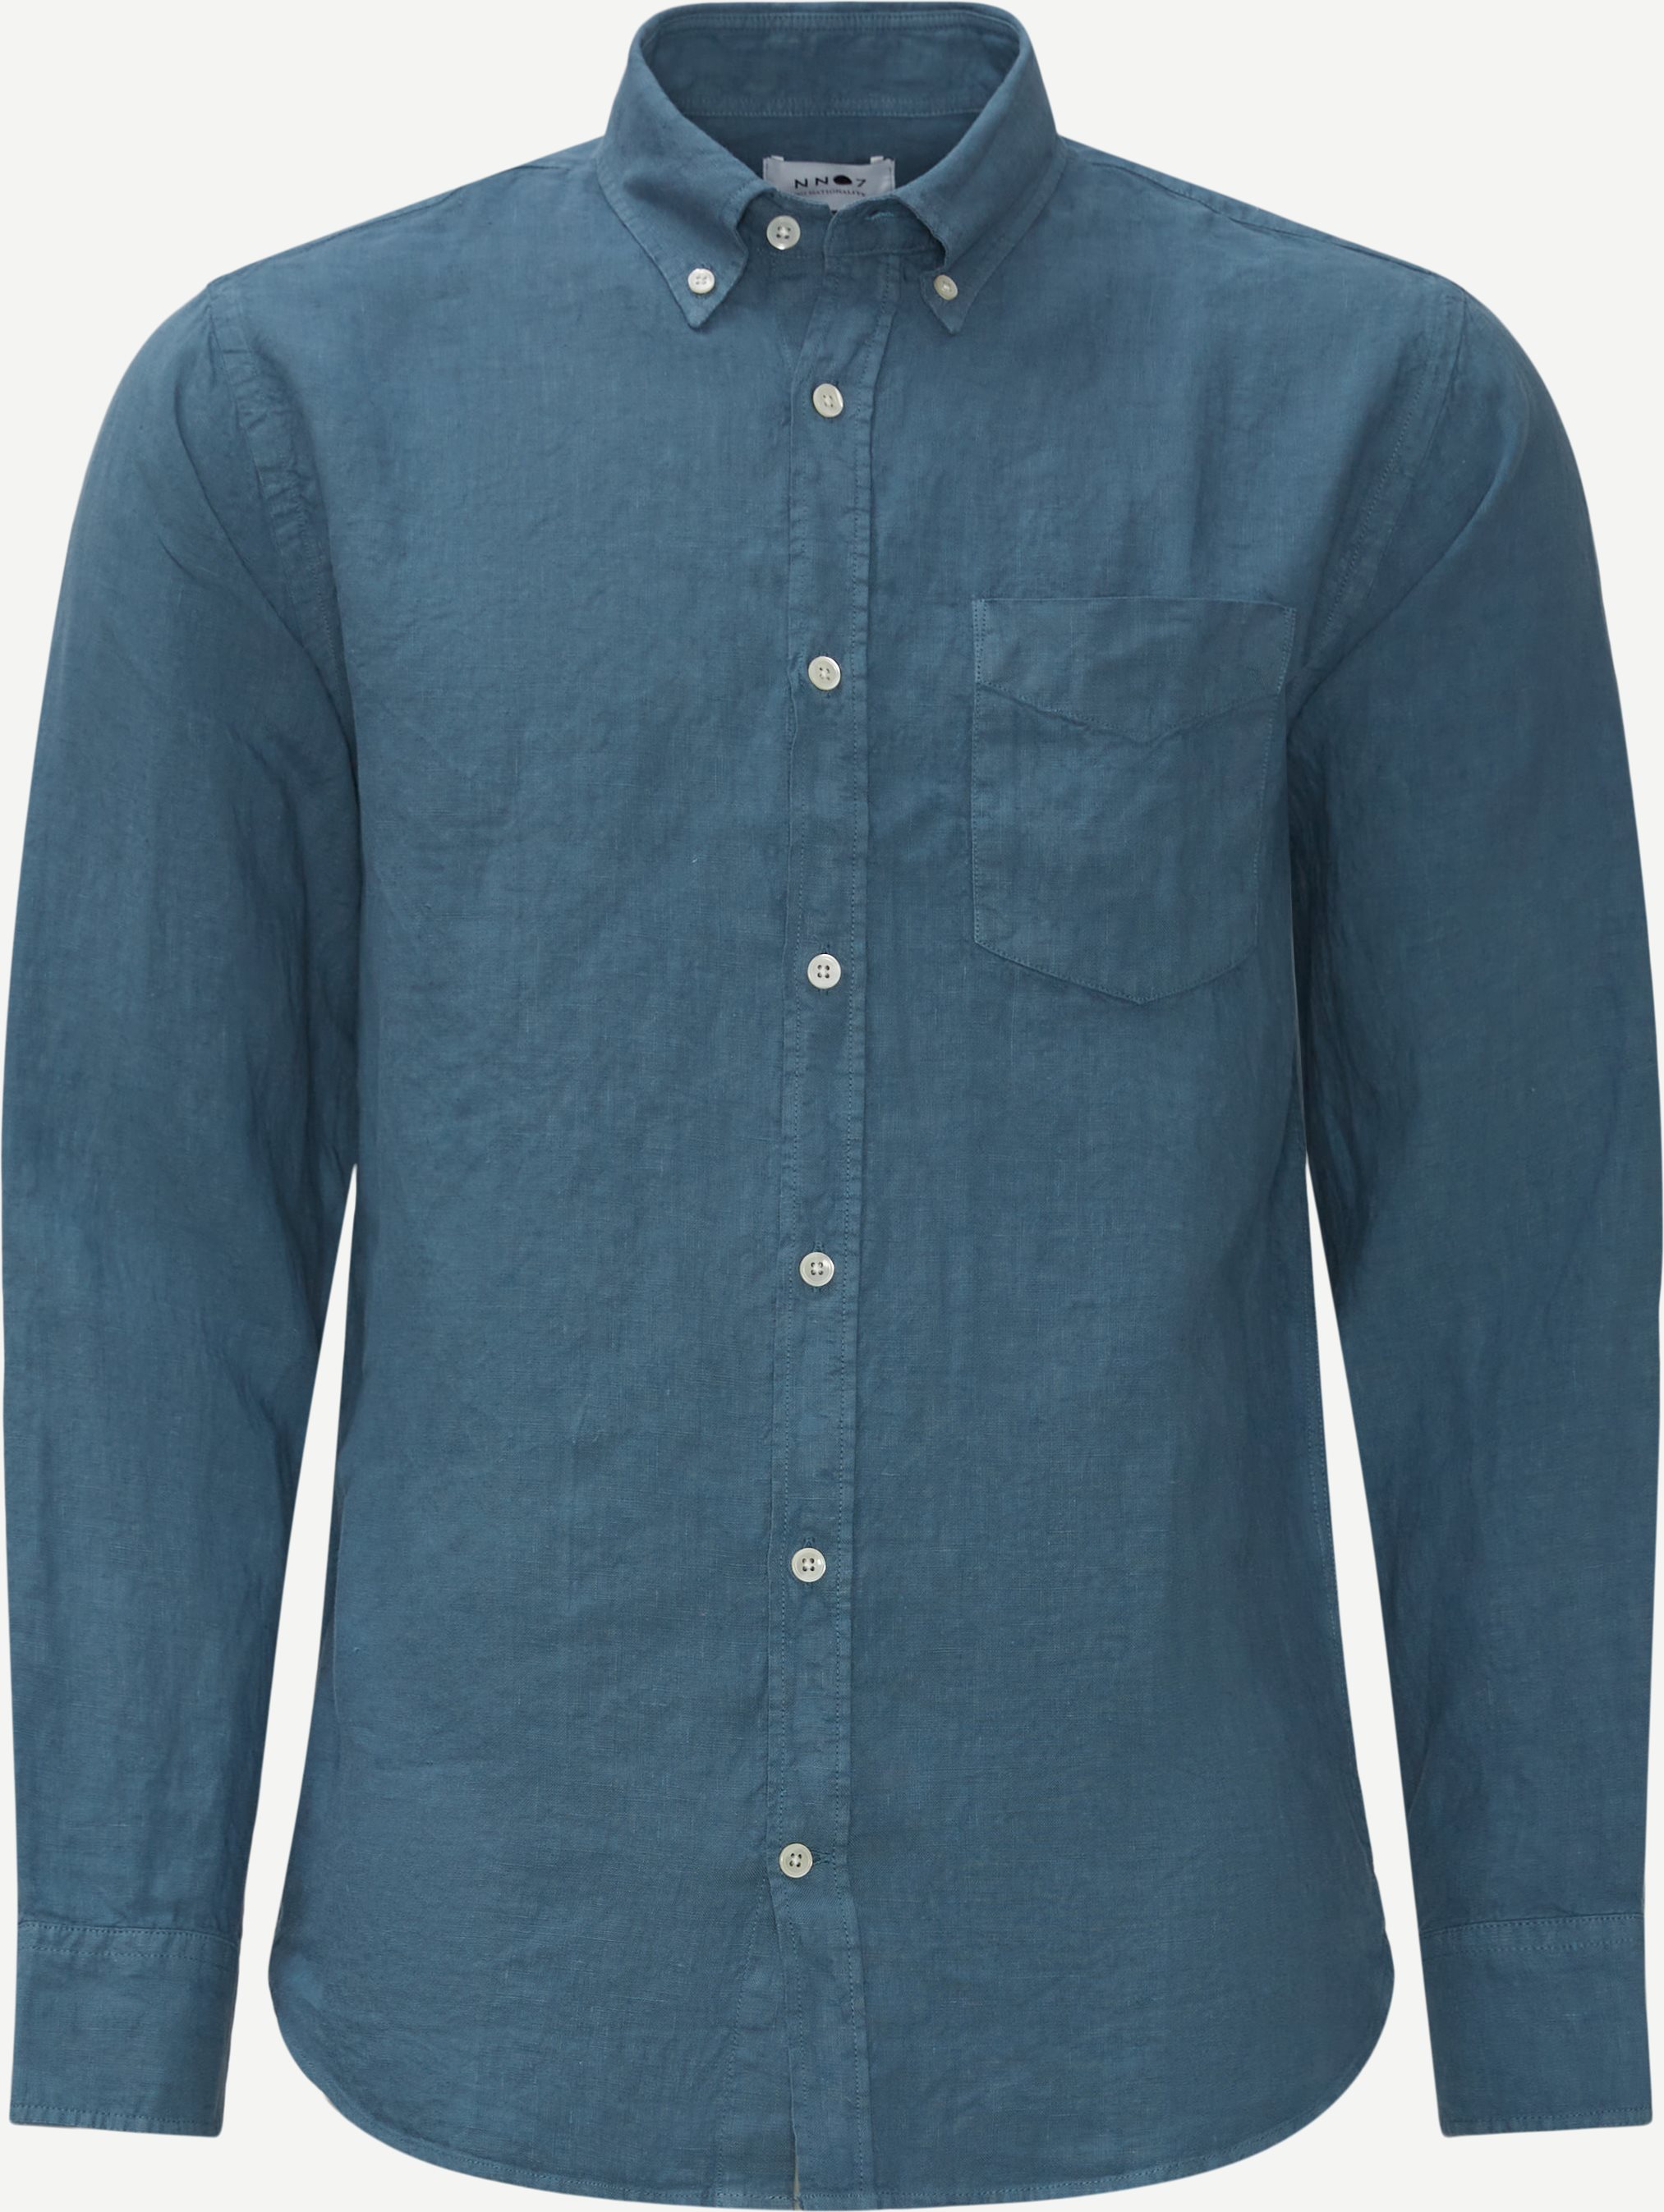 Shirts - Regular fit - Blue